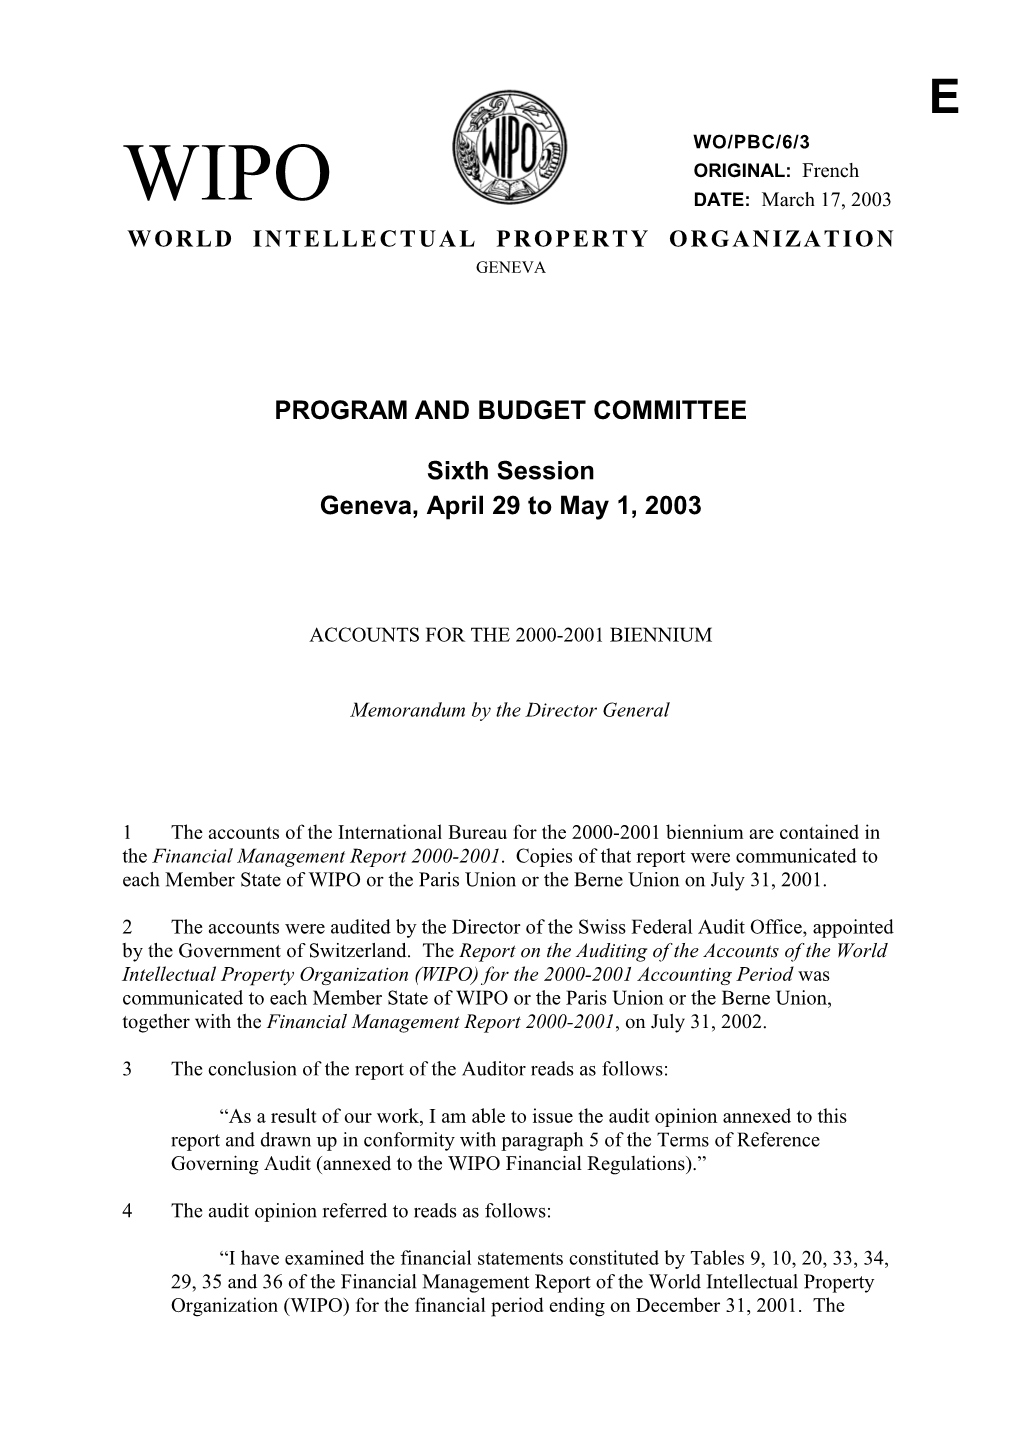 WO/PBC/6/3: Accounts for the 200-2001 Biennium